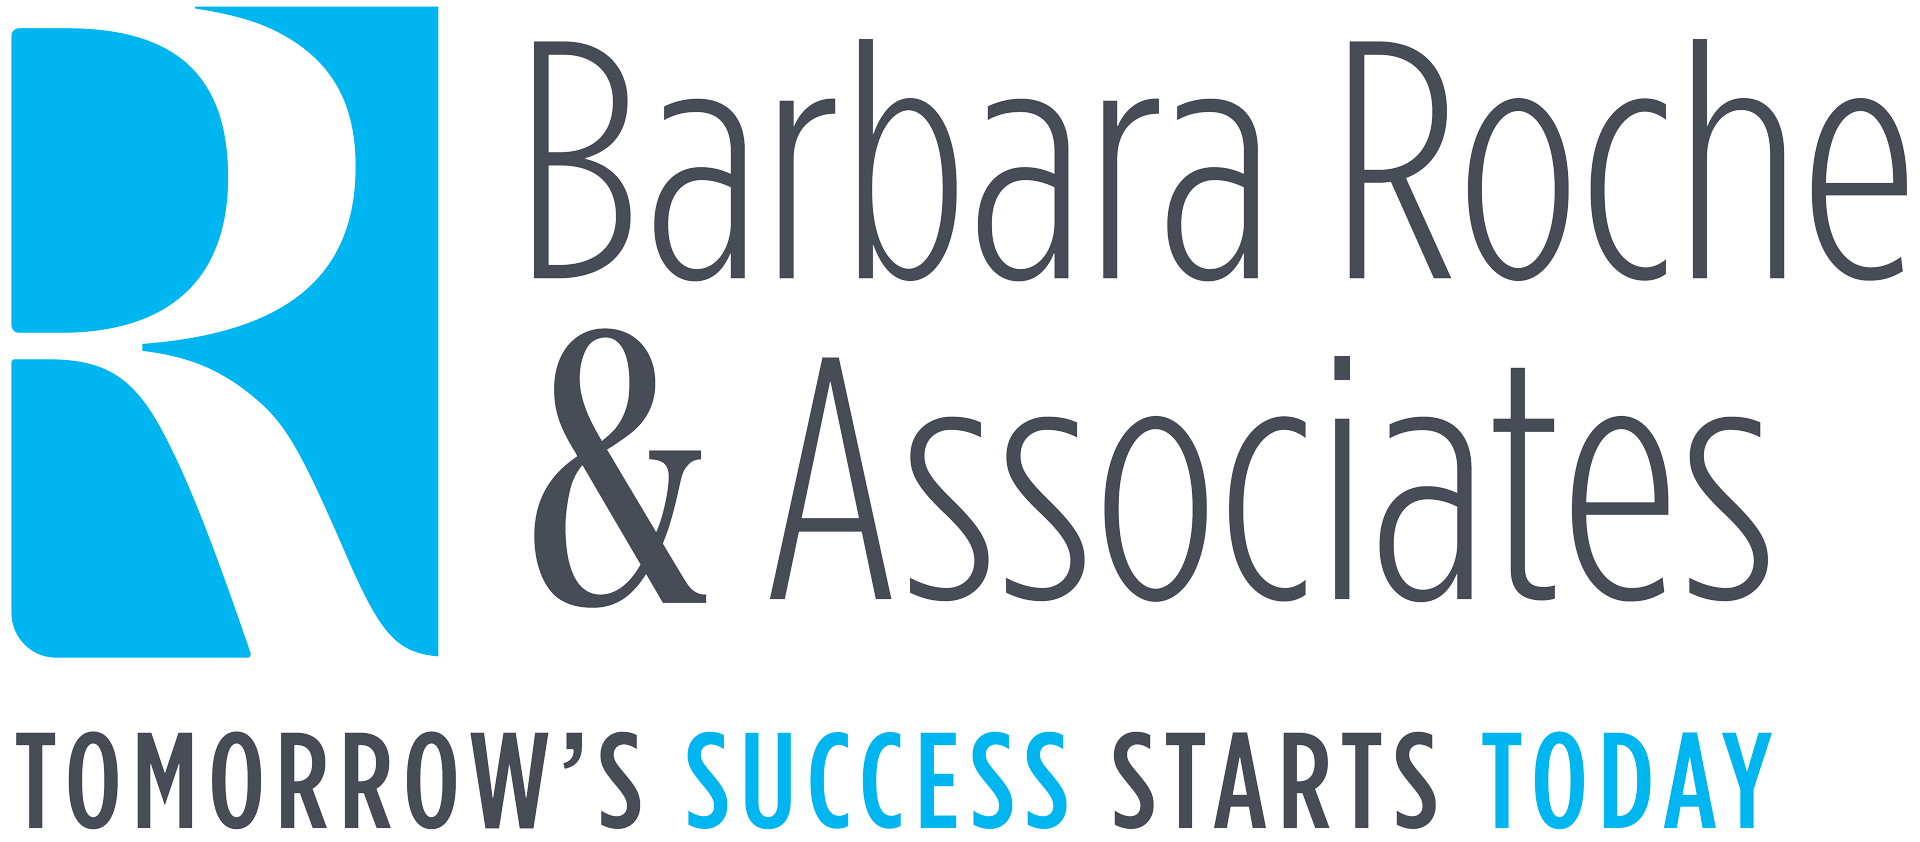 Barbara Roche & Associates